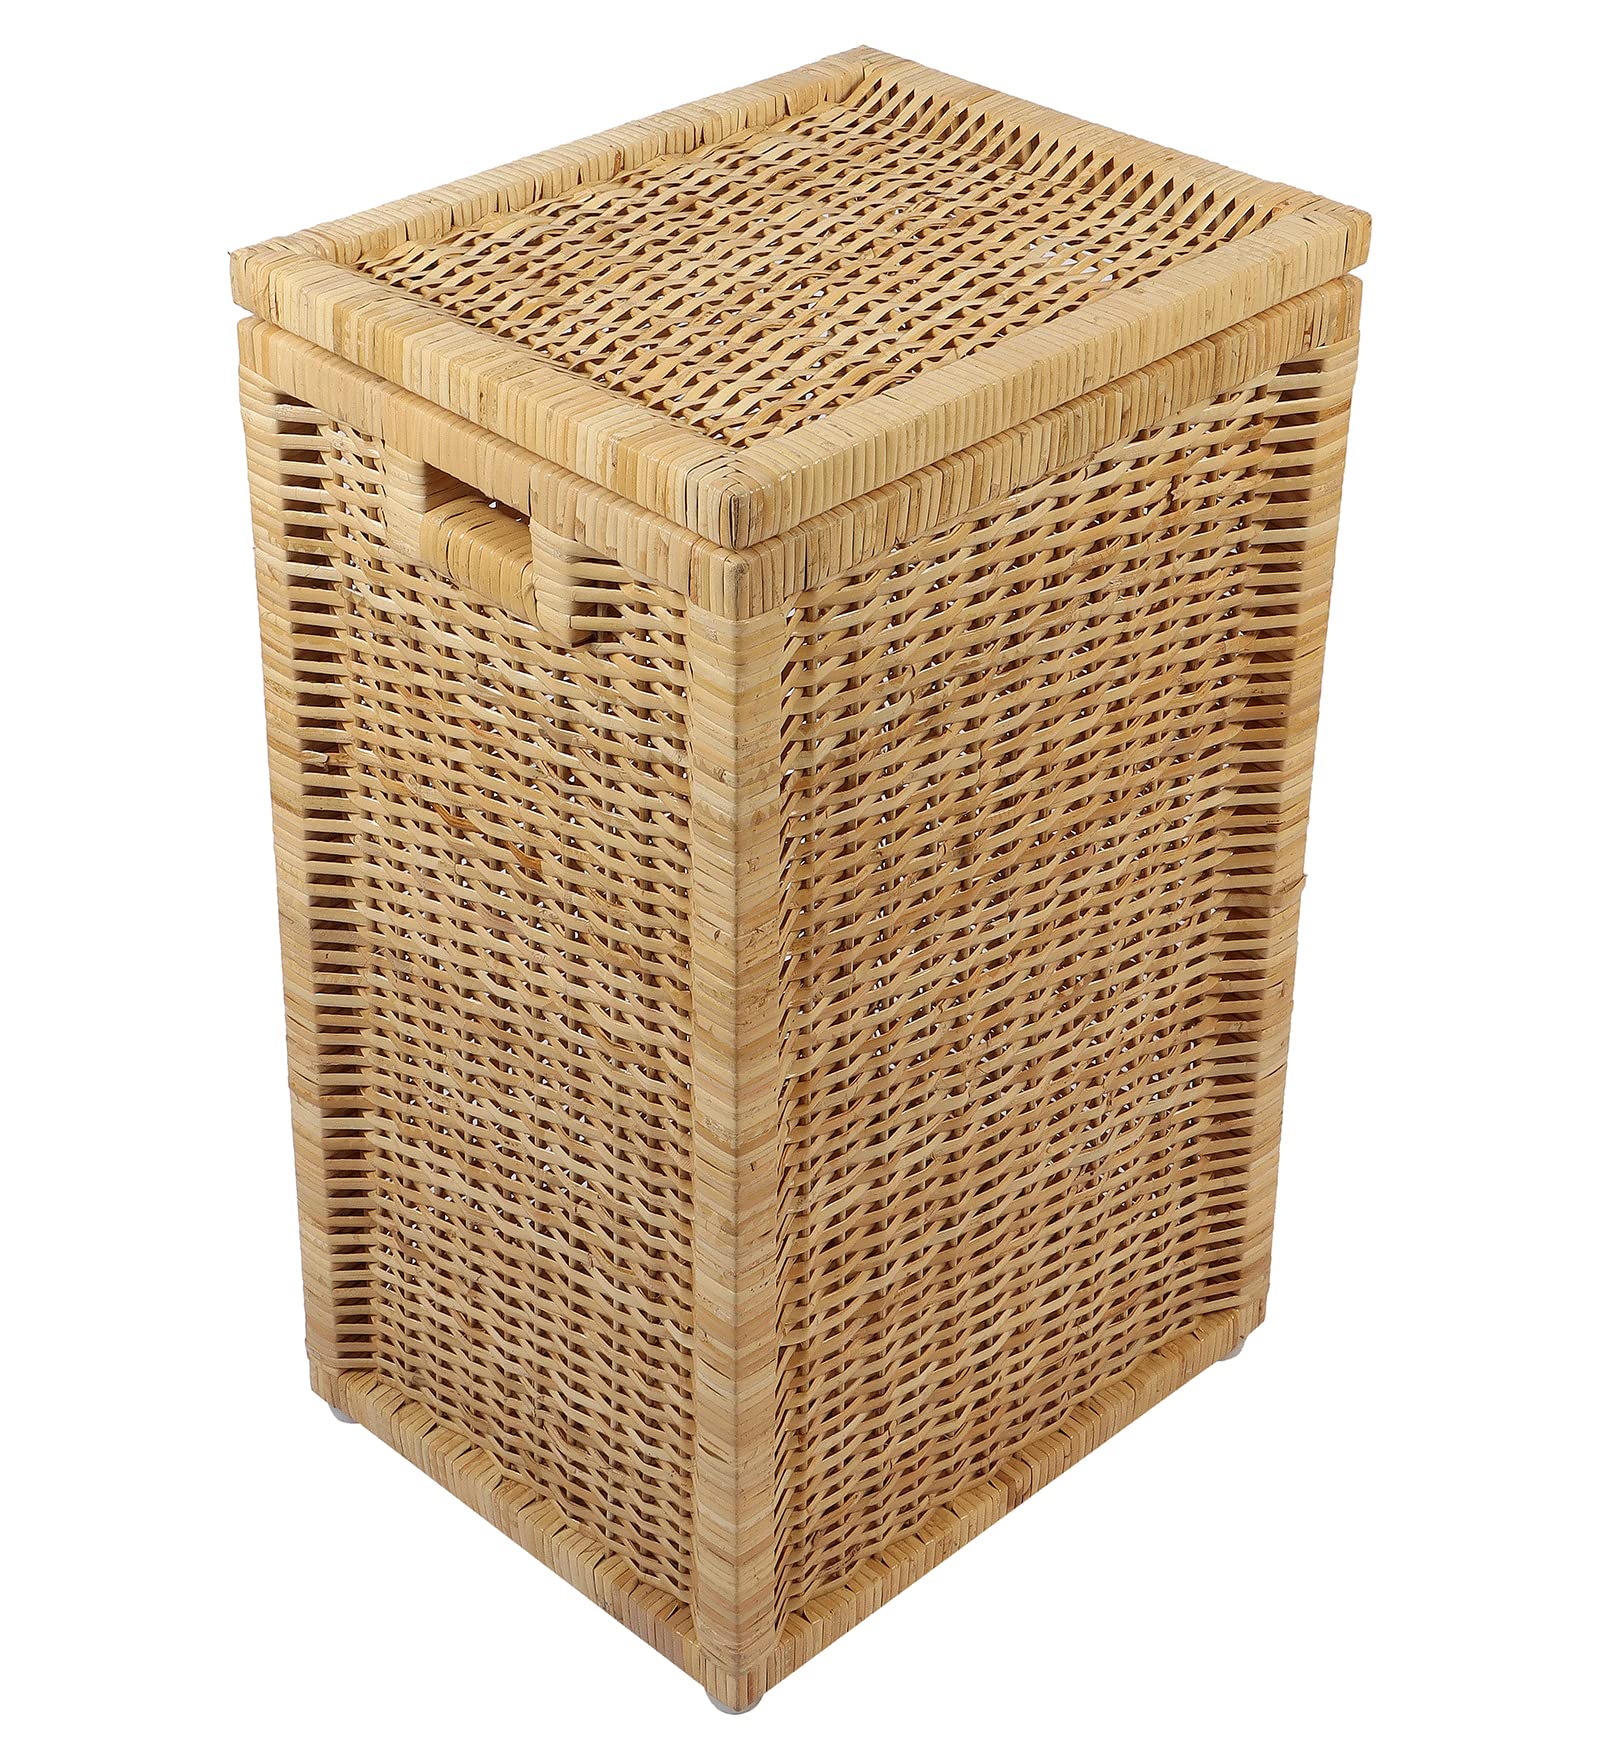 AKWAY wicker water hyacinth kauna grass bamboo cane Storage Basket with Lids | laundry hampers for bathroom wicker laundry basket storage basket(14"L x 18"W x 22"H) - Akway